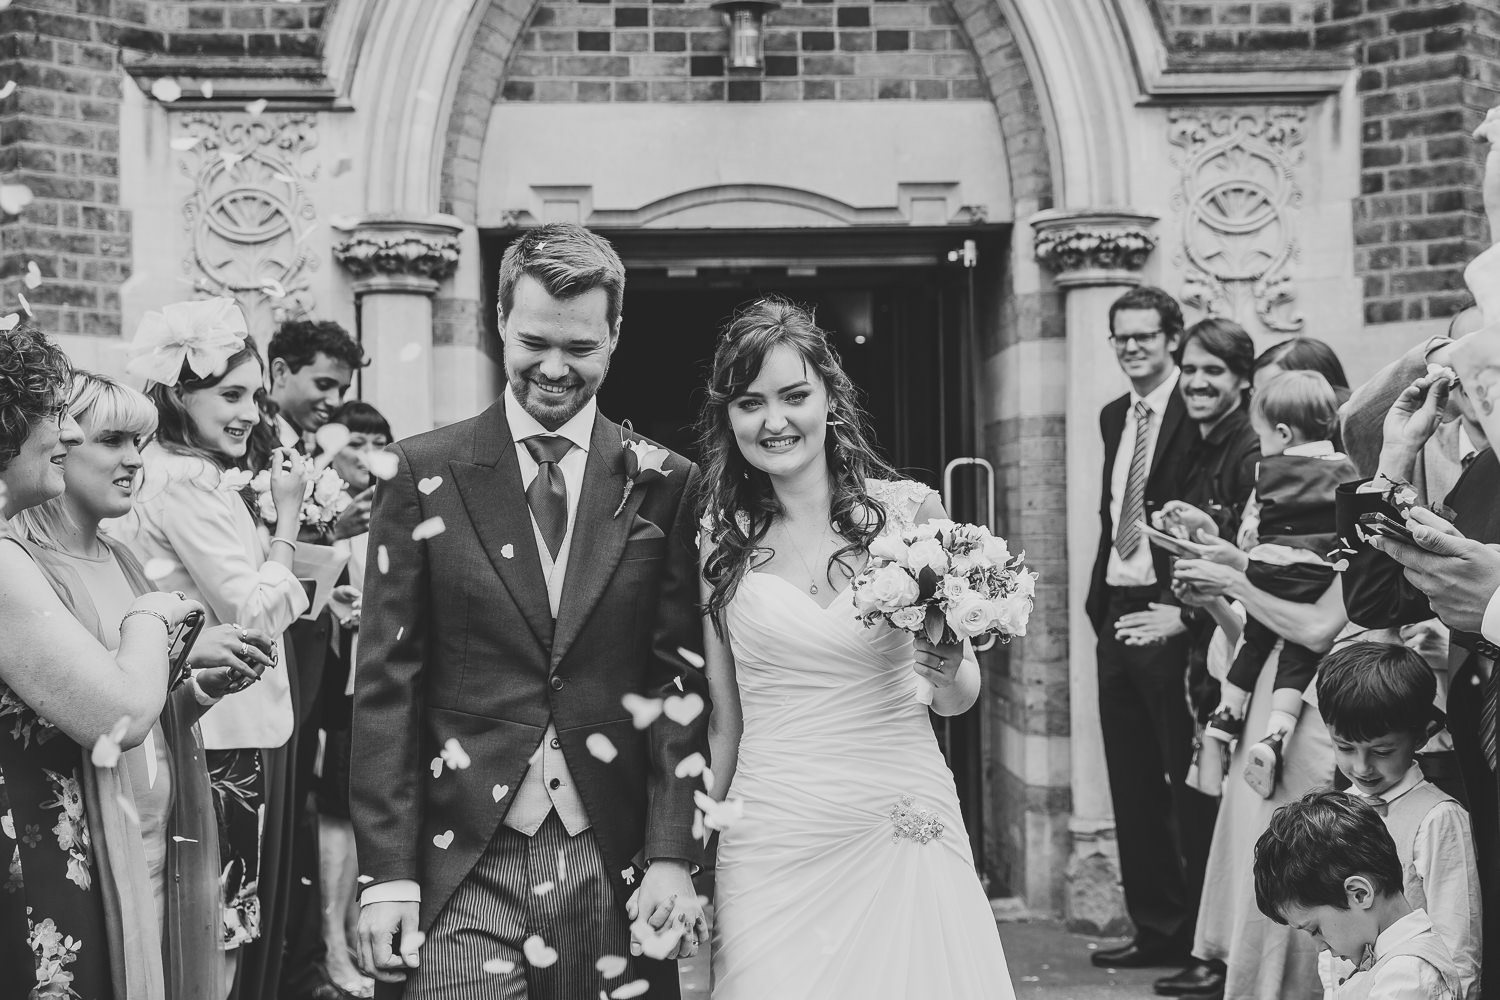 Black and white wedding photo of bride and groom walking through wedding confetti